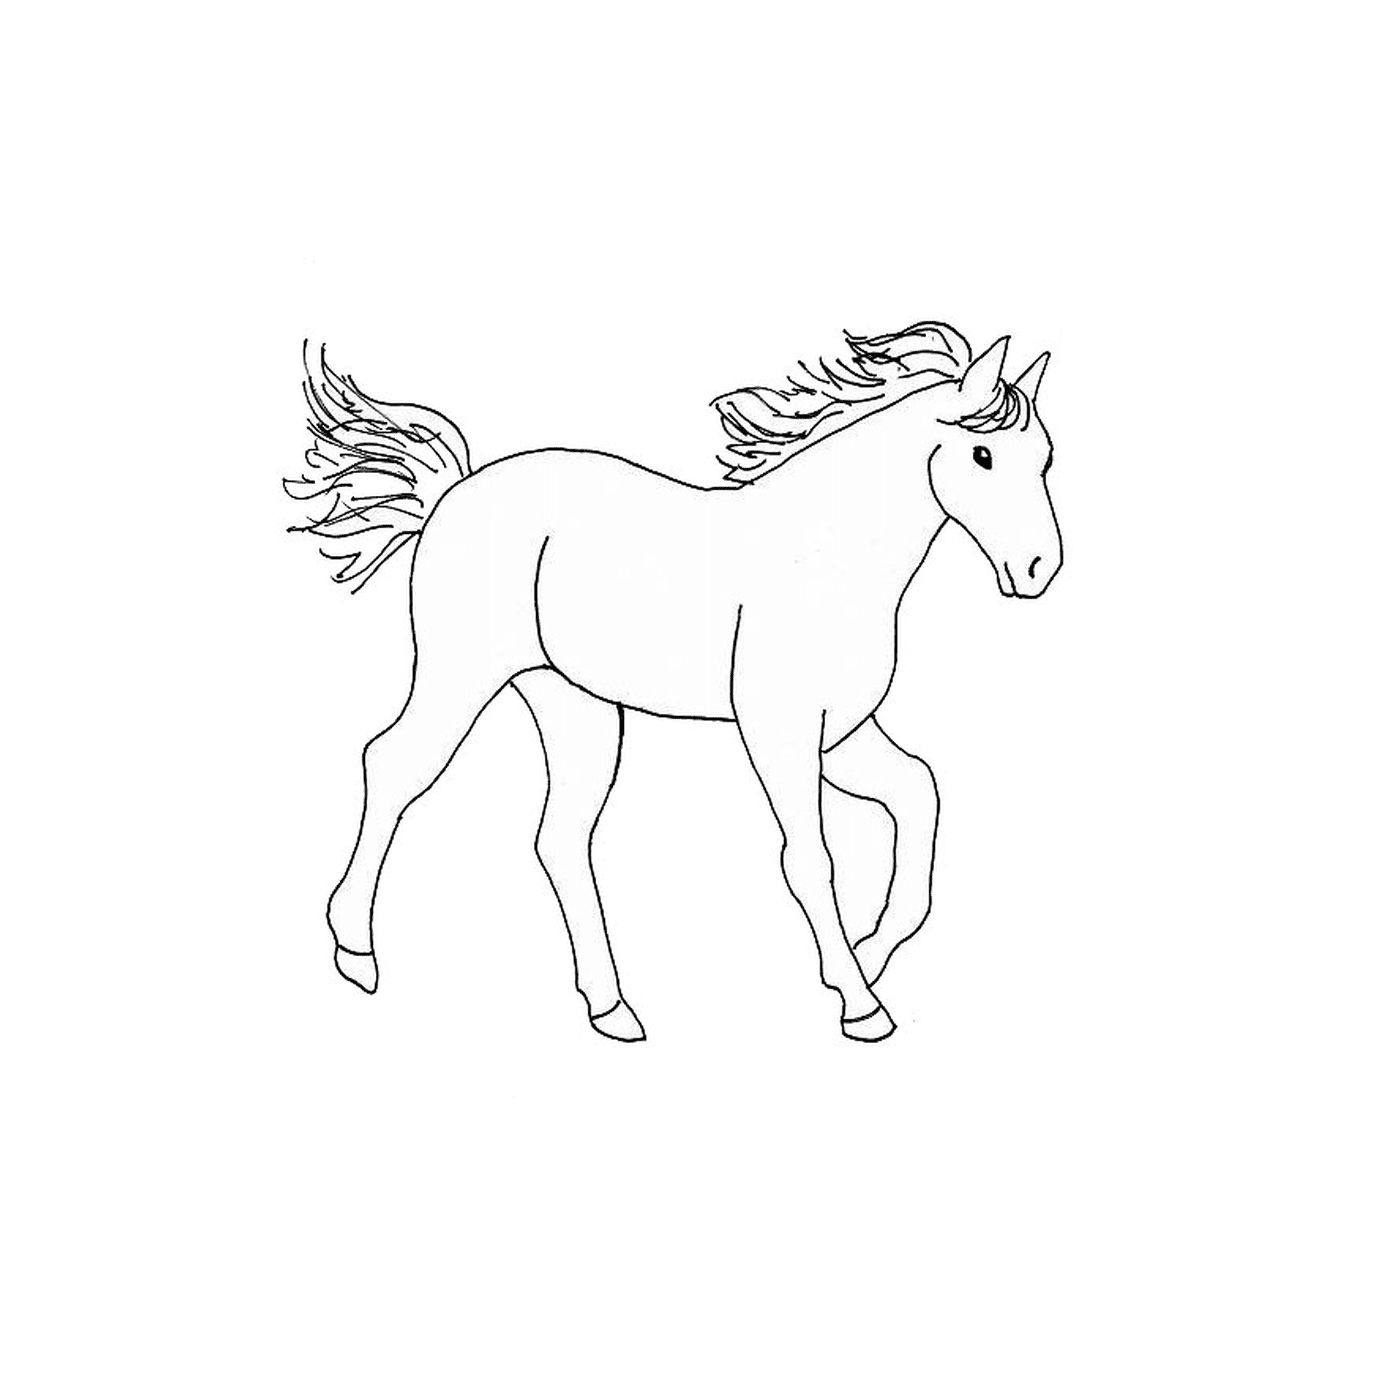  Horse - A horse 